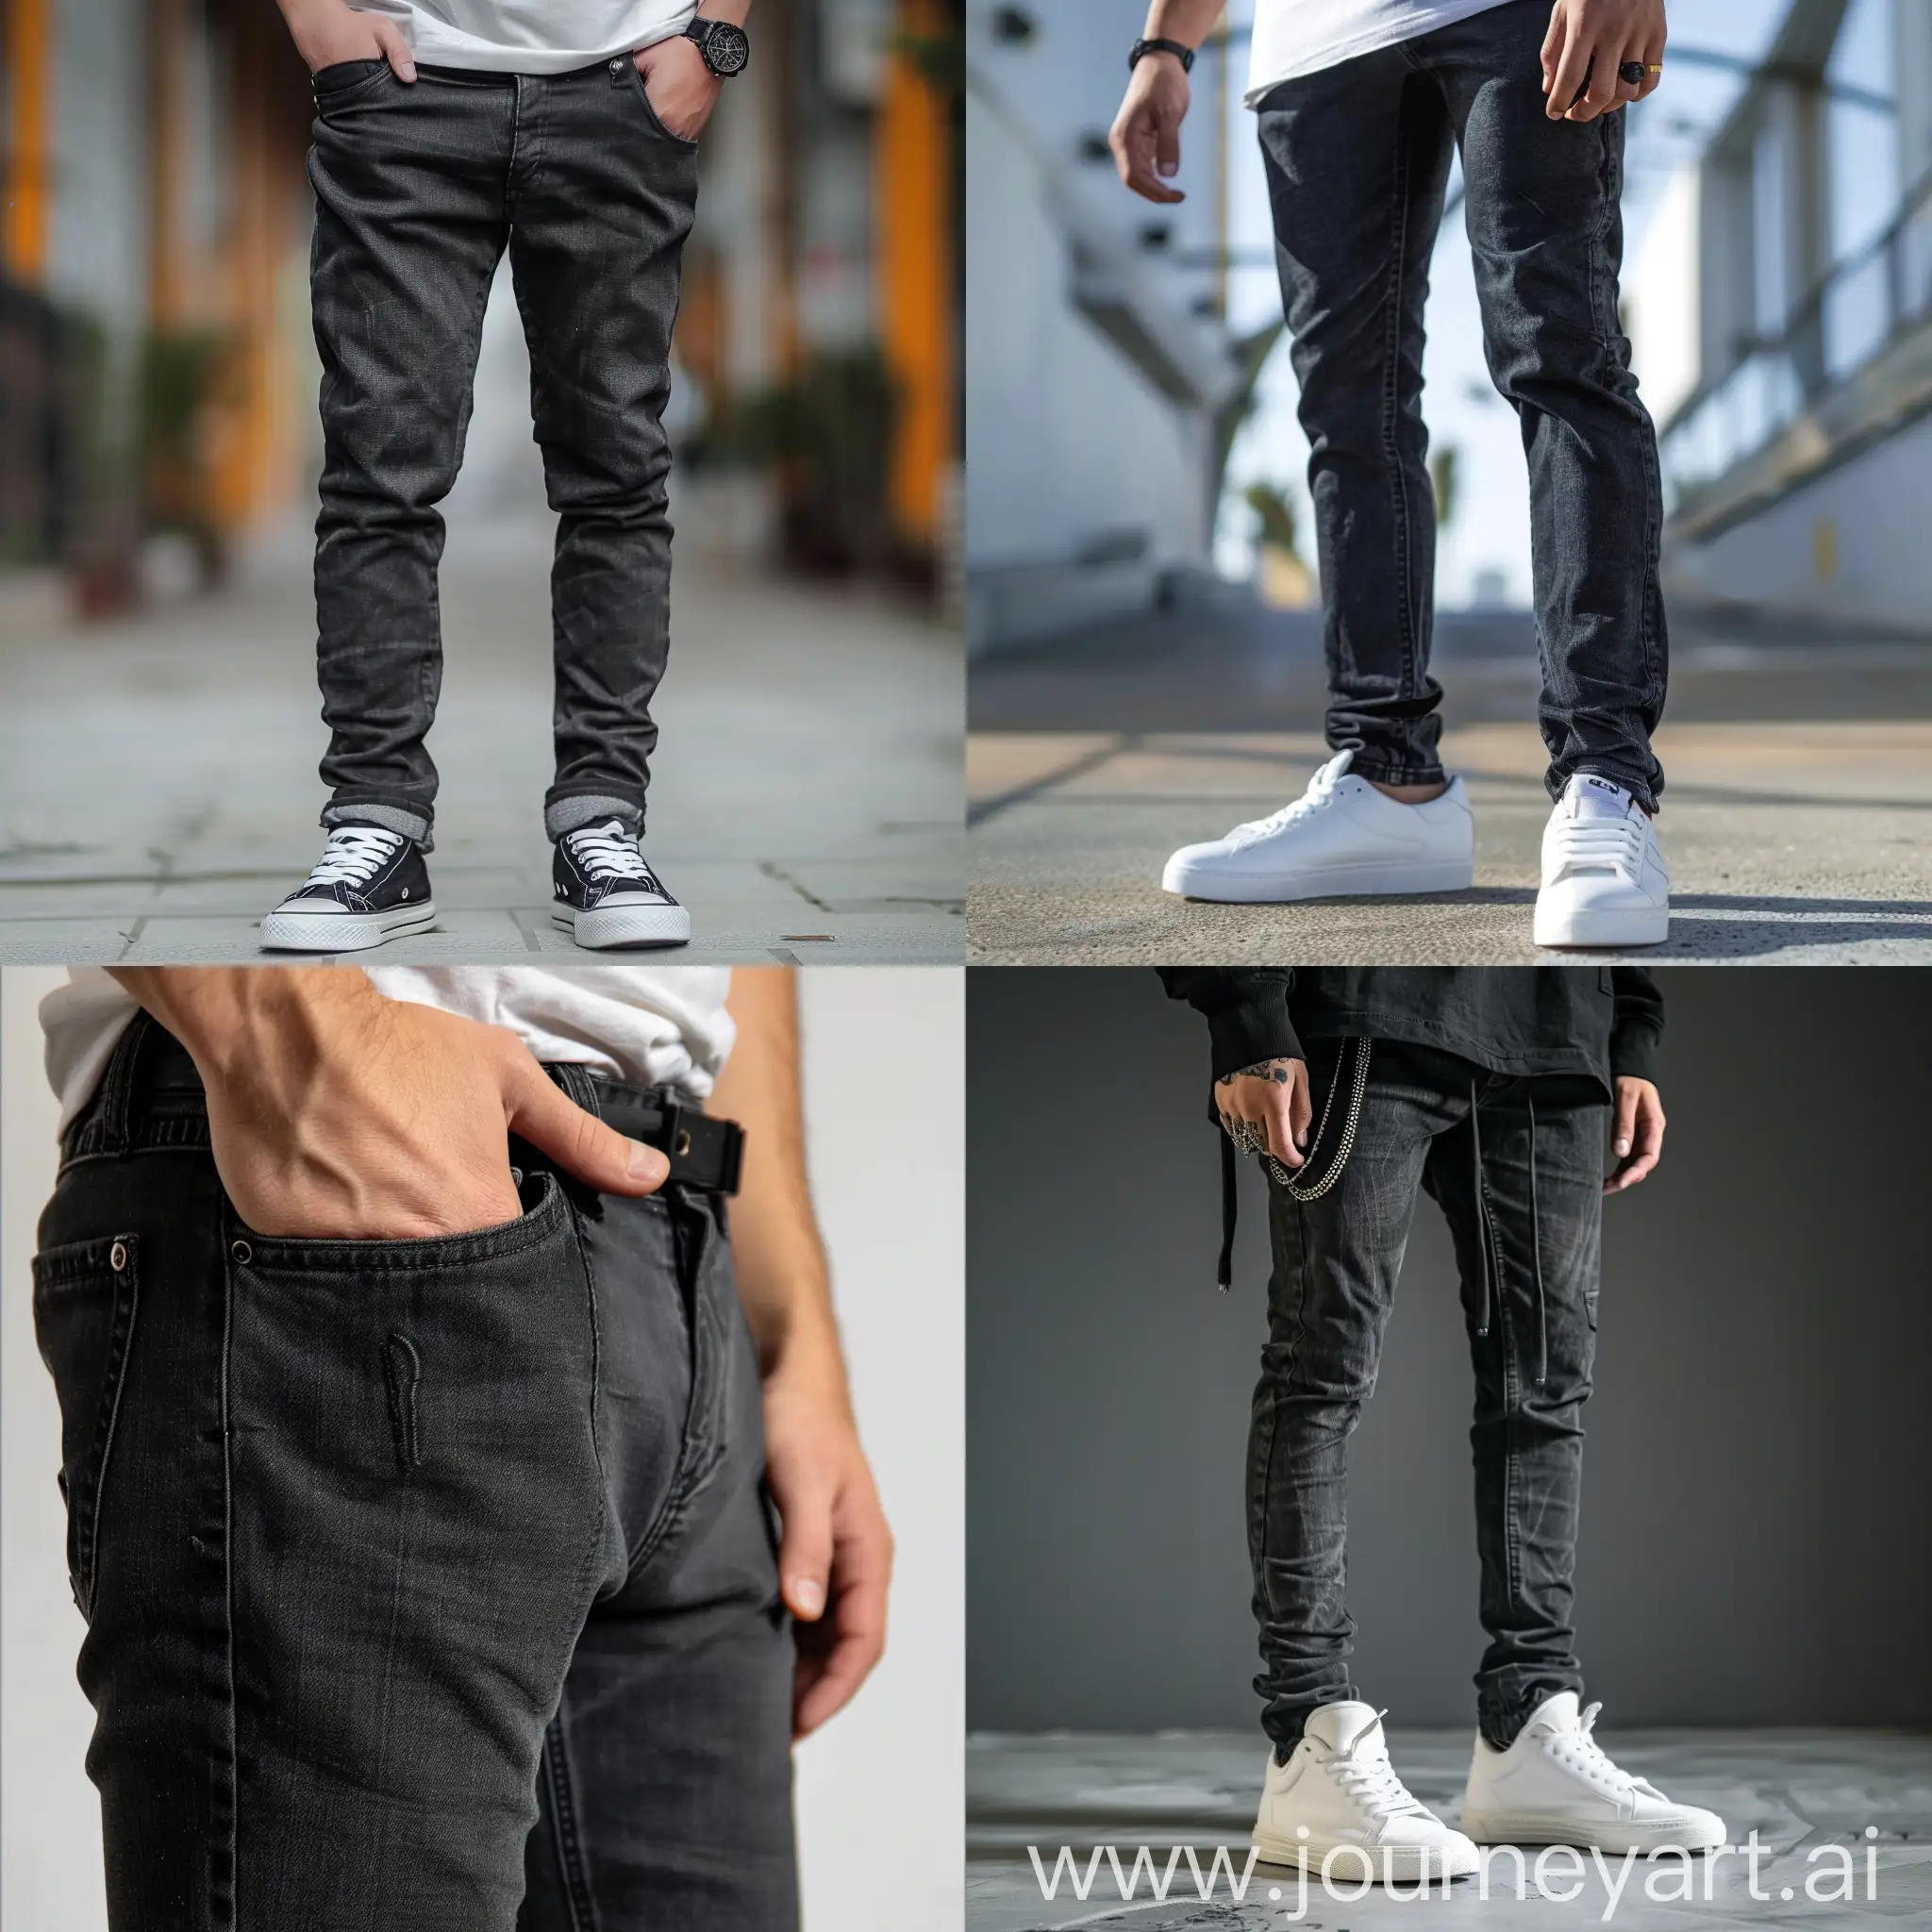 Stylish-Mens-Slim-Fit-Jeans-in-Black-Twill-Fabric